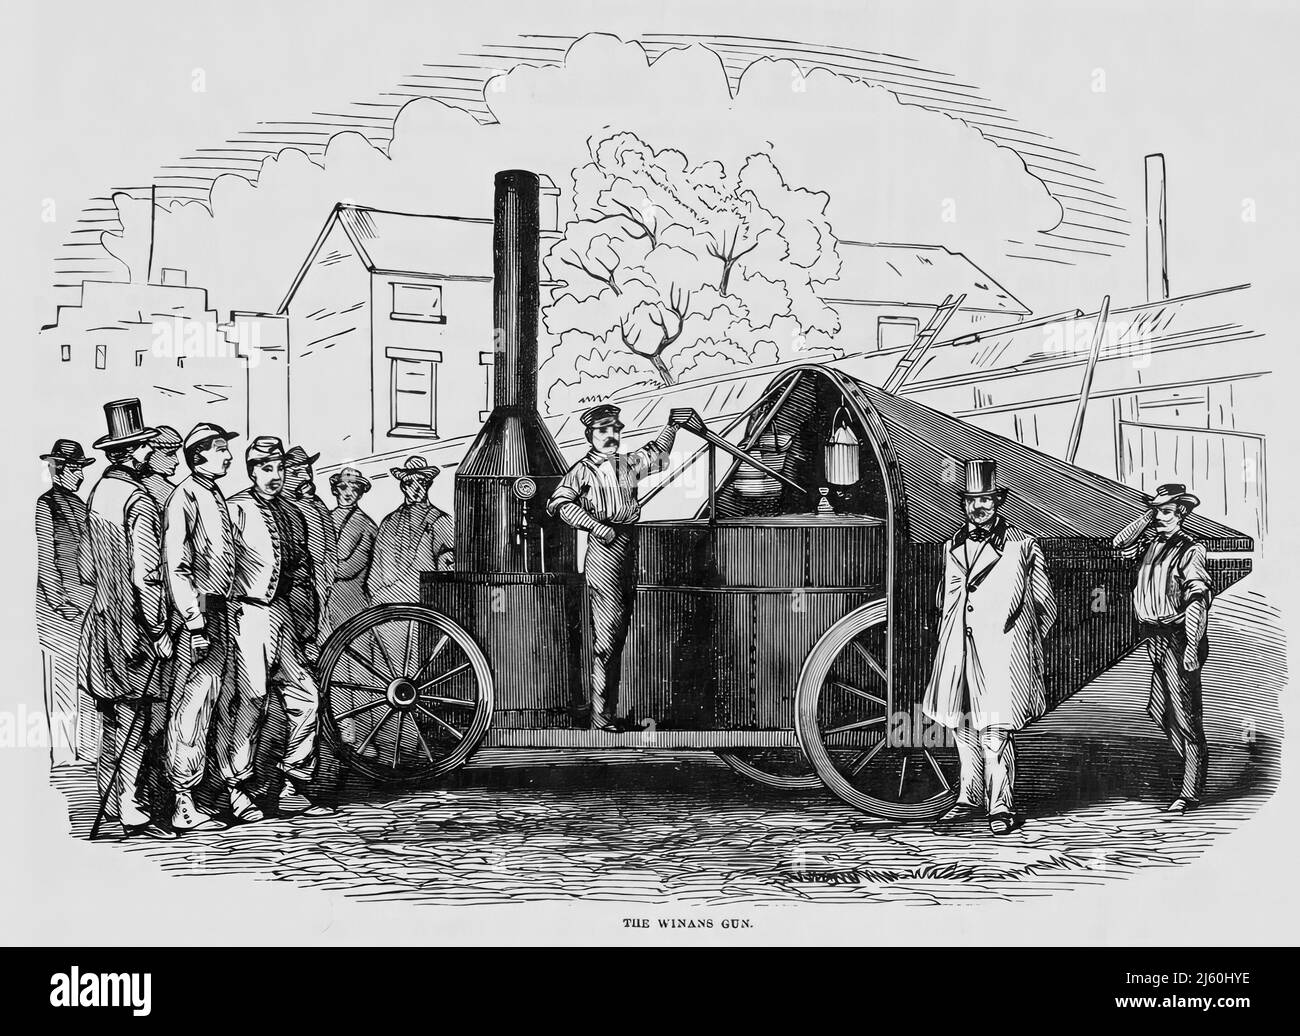 The Winans Steam Gun in the American Civil War. 19th century illustration Stock Photo